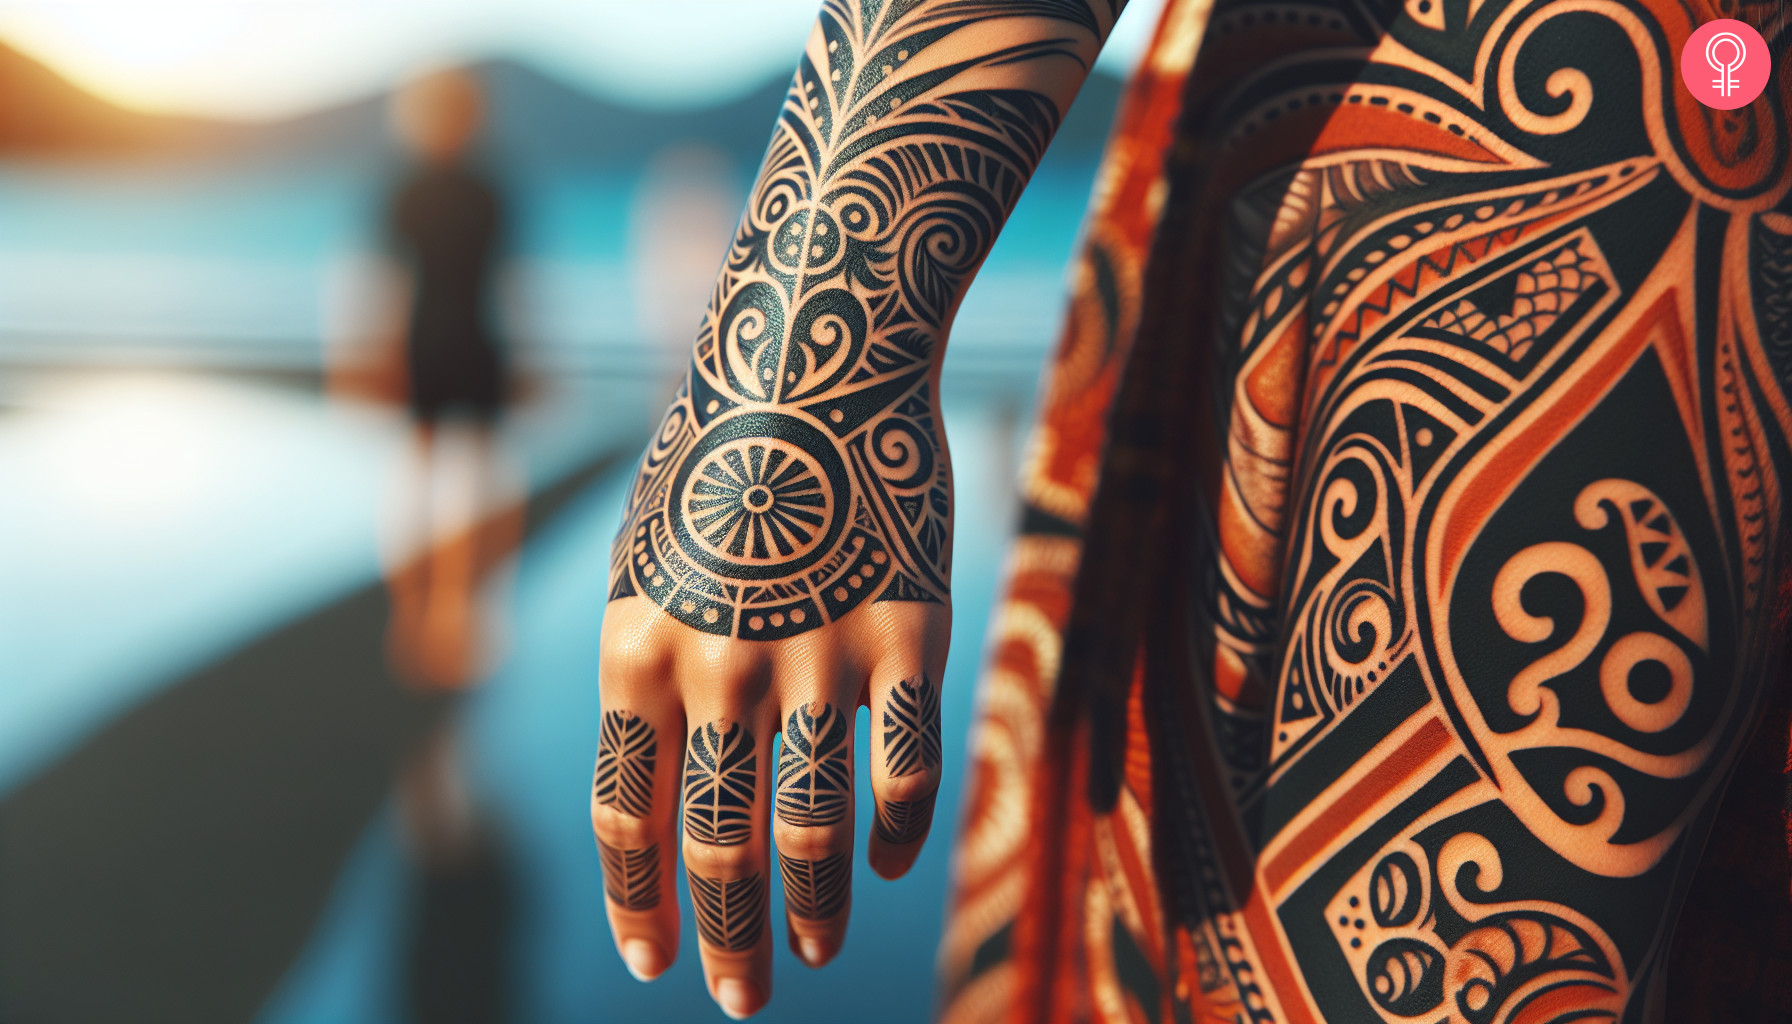 Heart spiral maori tattoo on the hand of a woman